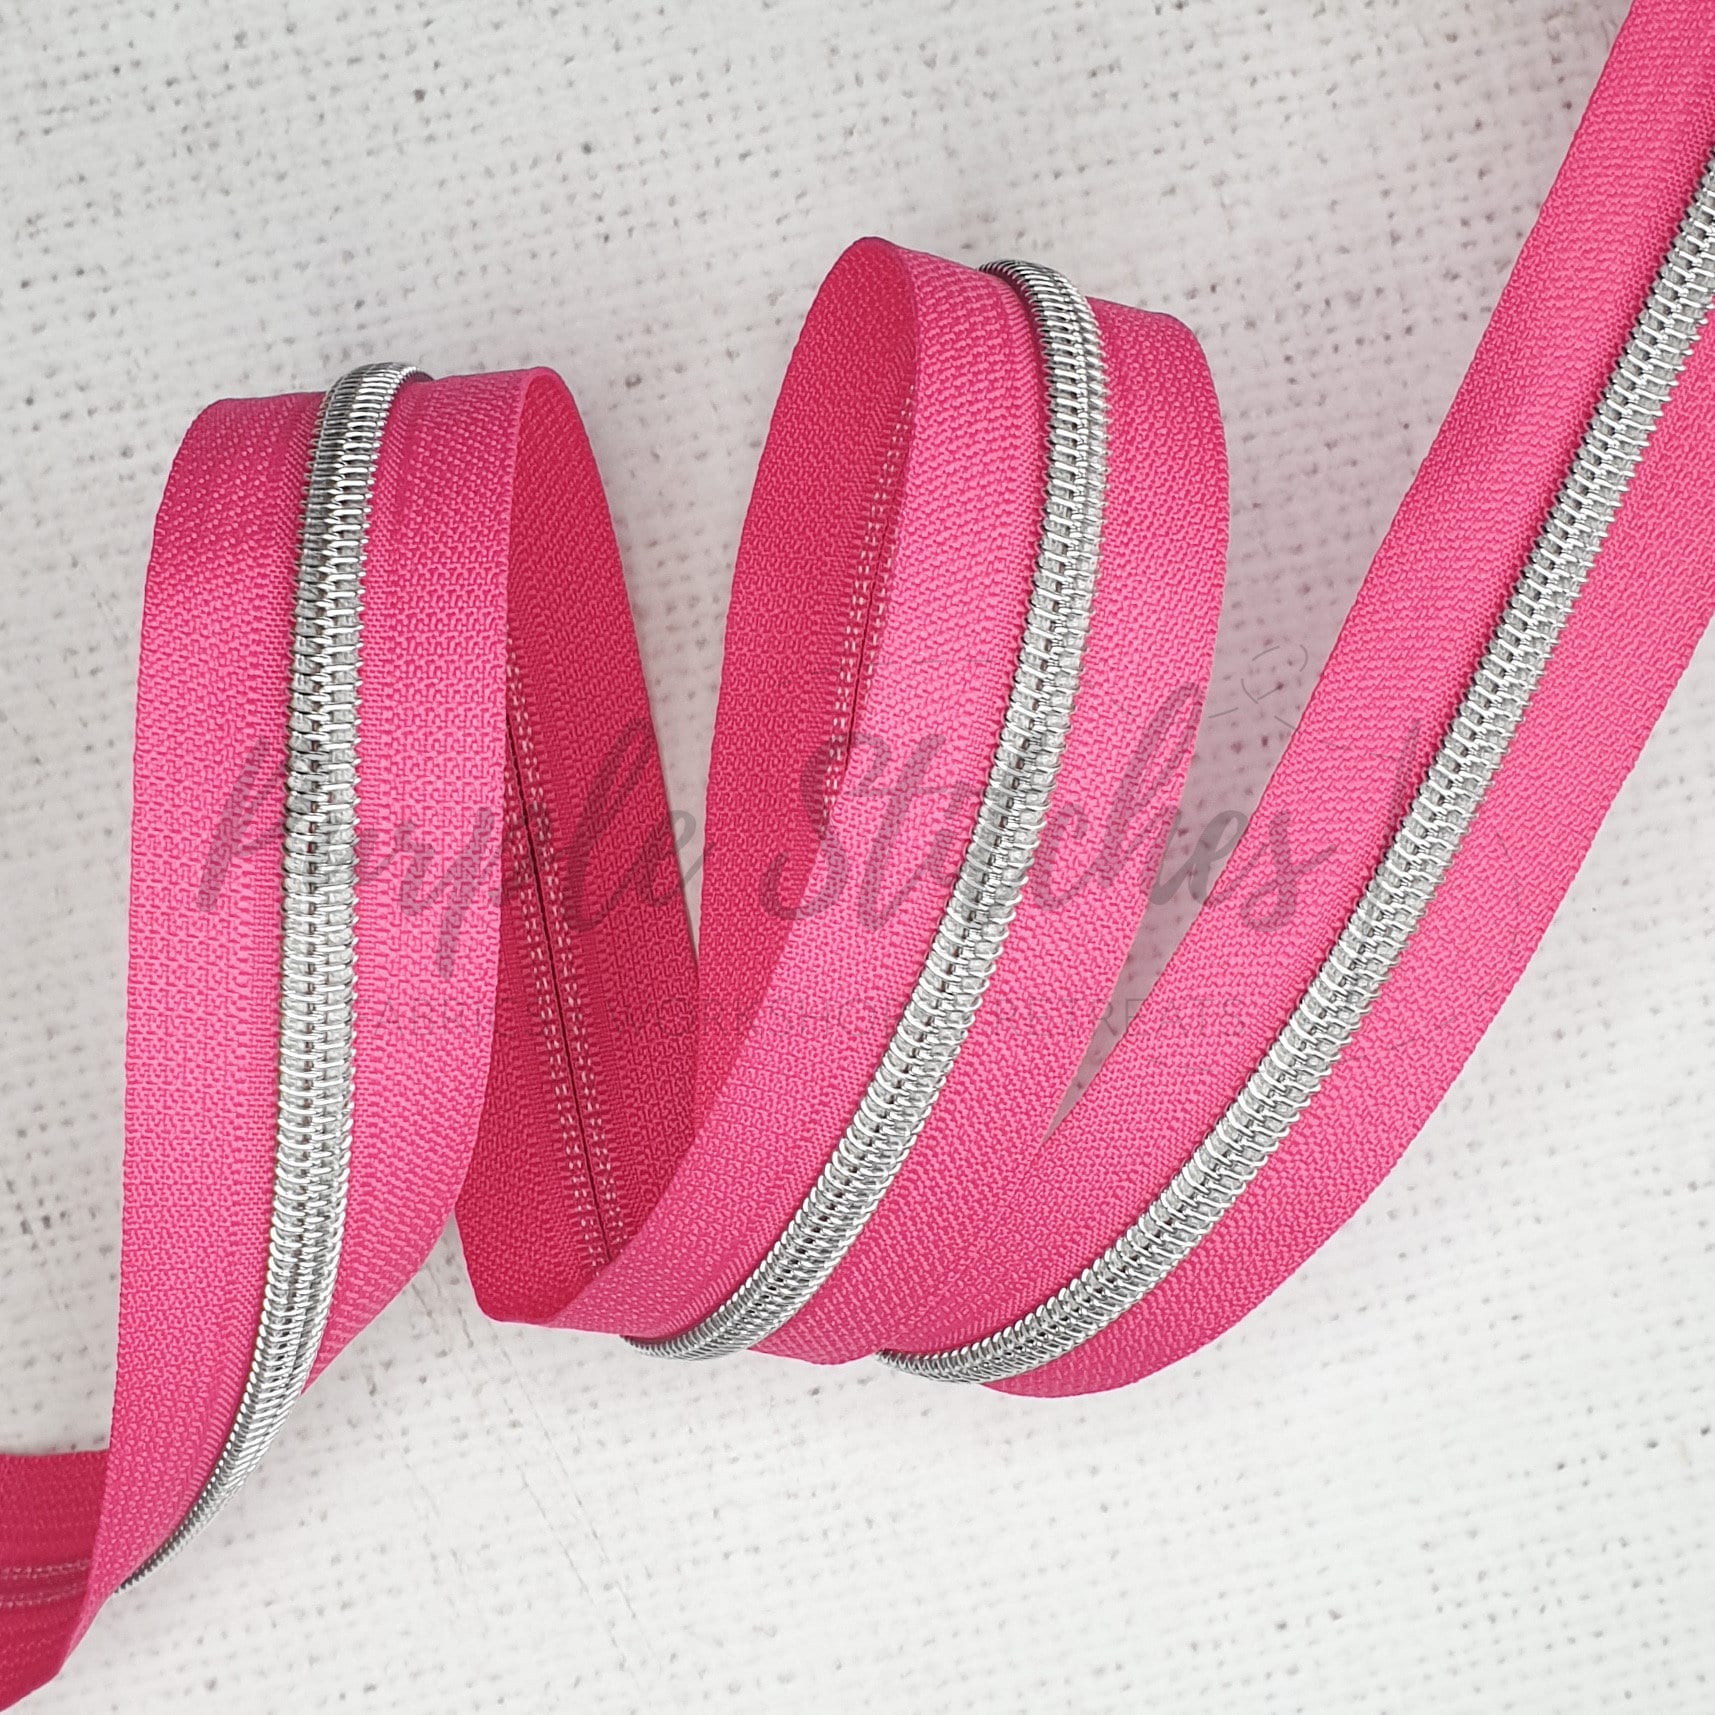 Organza Ribbon - 1 1/2 x 100 yds, Hot Pink - ULINE - S-13171HPINK